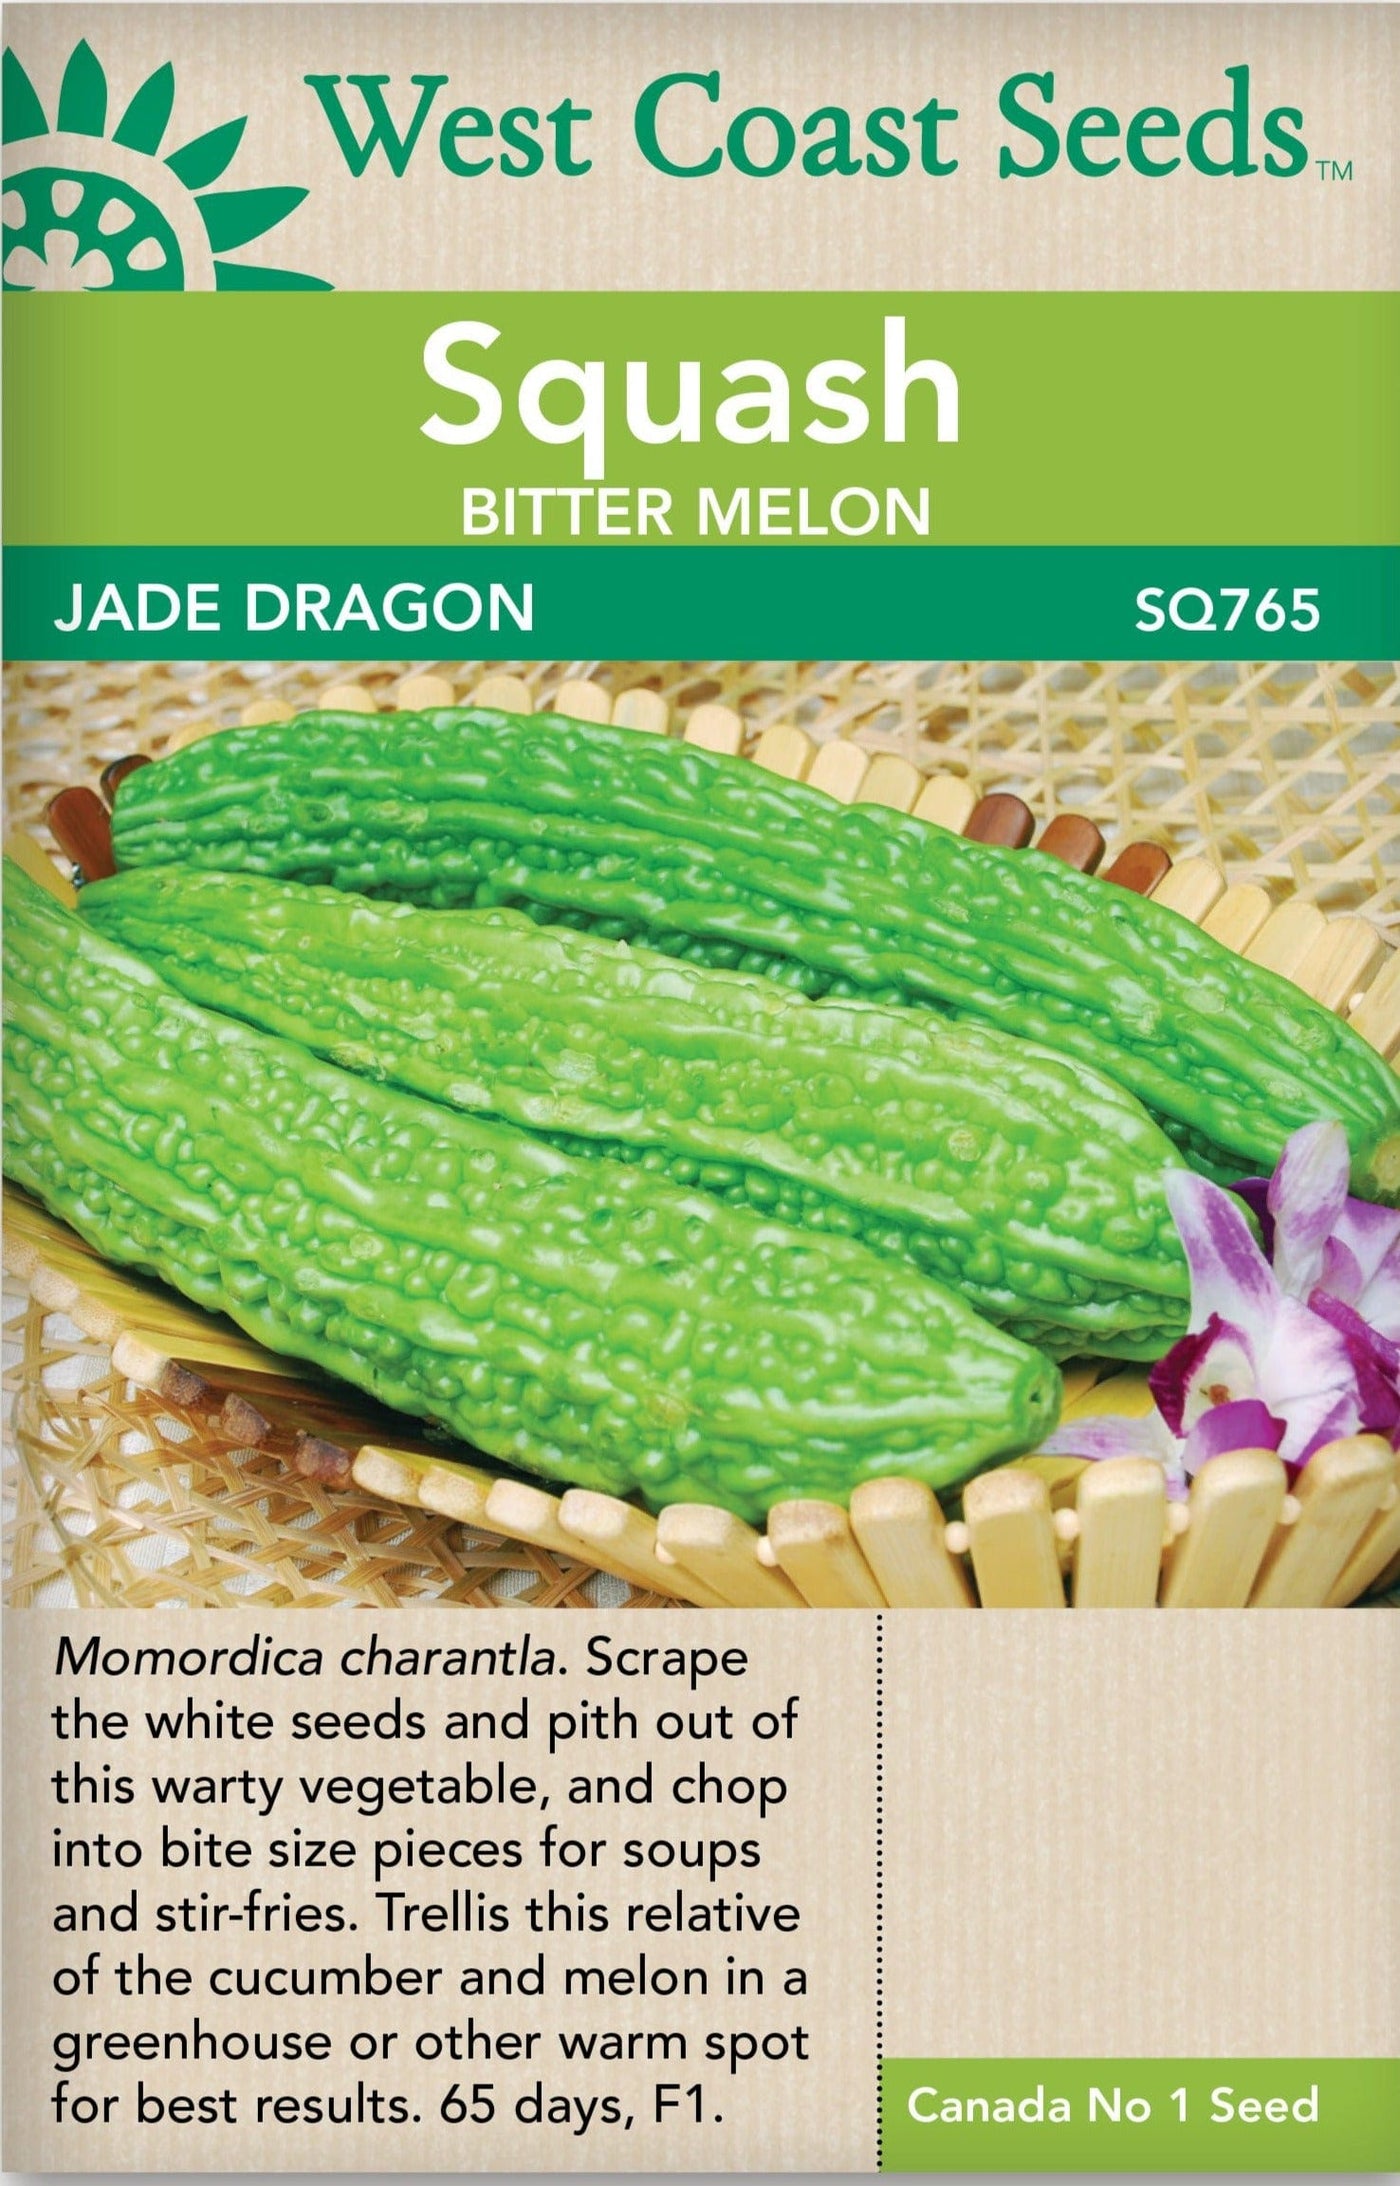 Squash Jade Dragon - West Coast Seeds